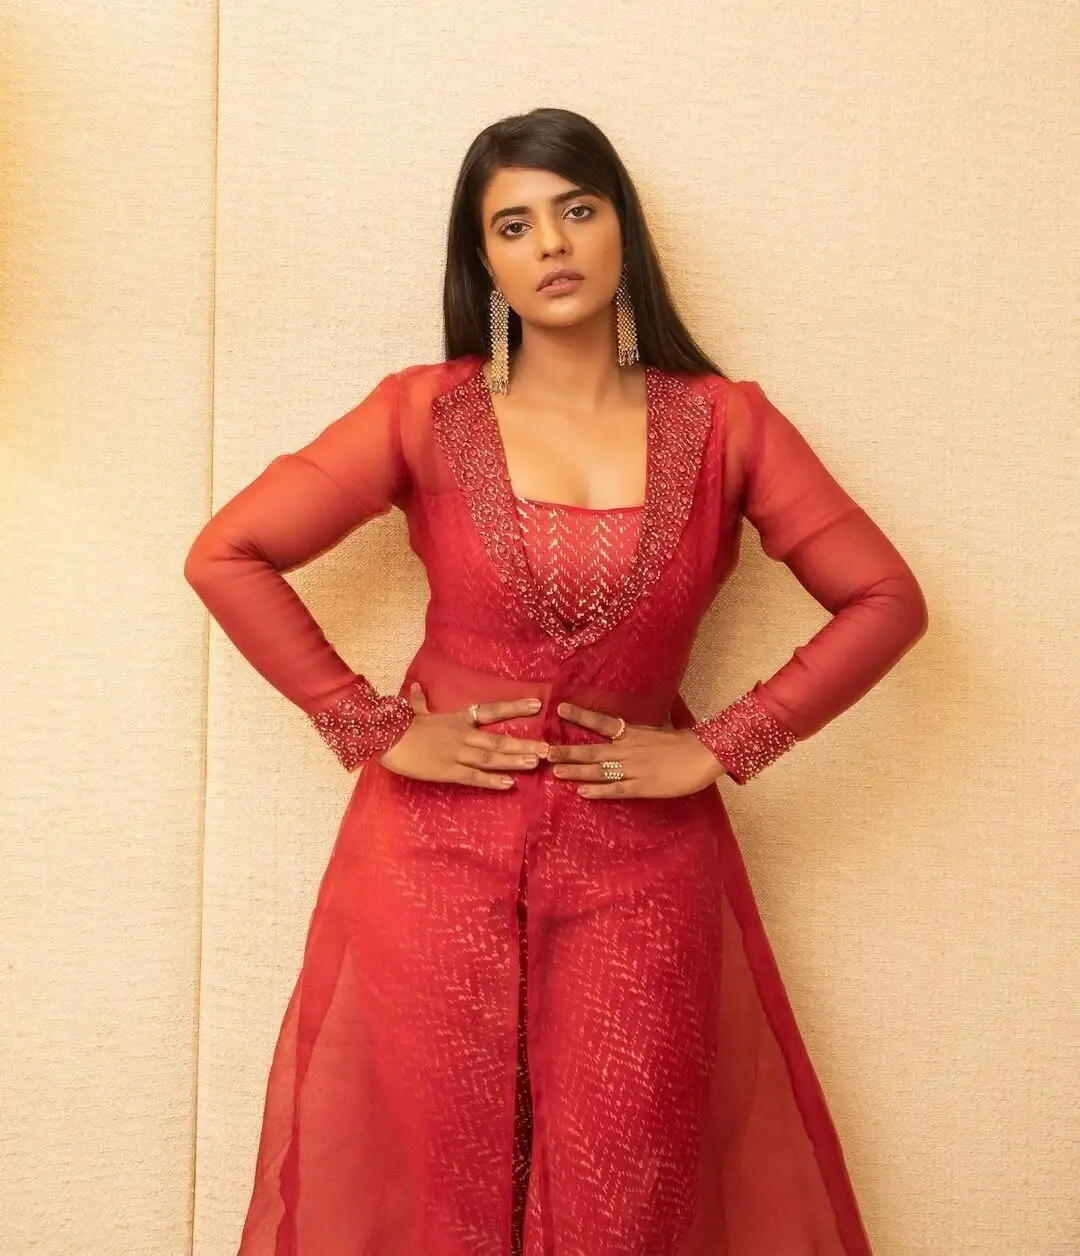 SOUTH INDIAN ACTRESS AISHWARYA RAJESH IN RED DRESS 1